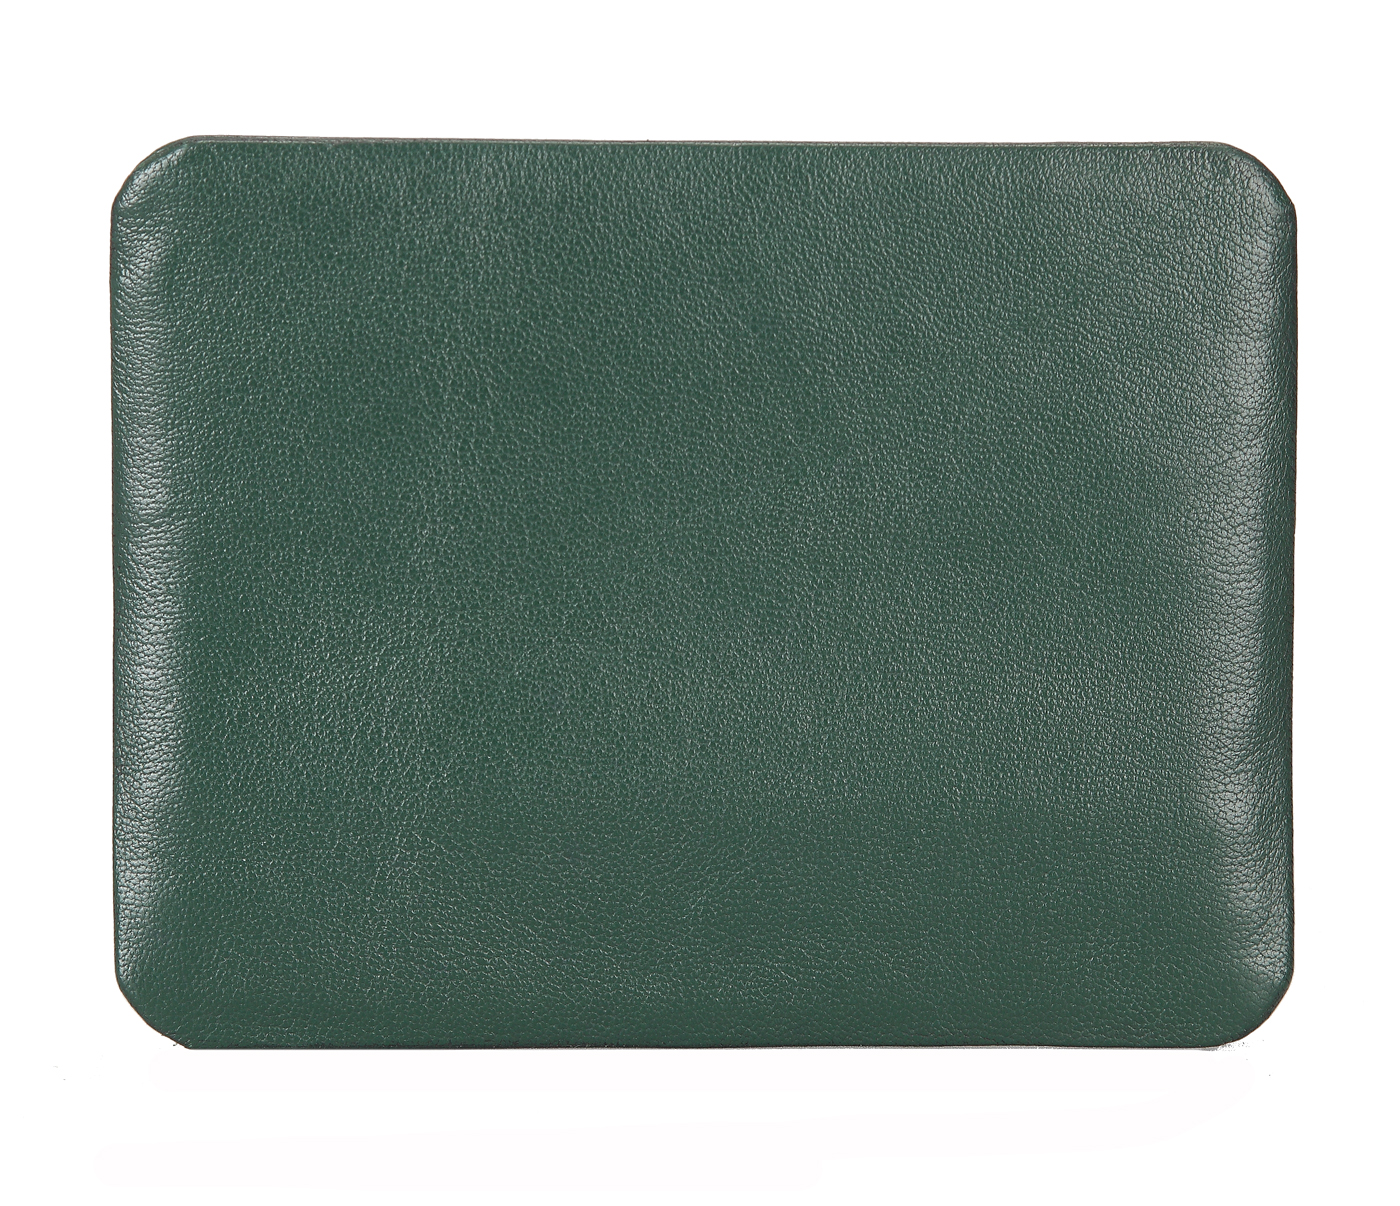 VW7--Ultra Slim Credit Card Case in Genuine Leather - Green